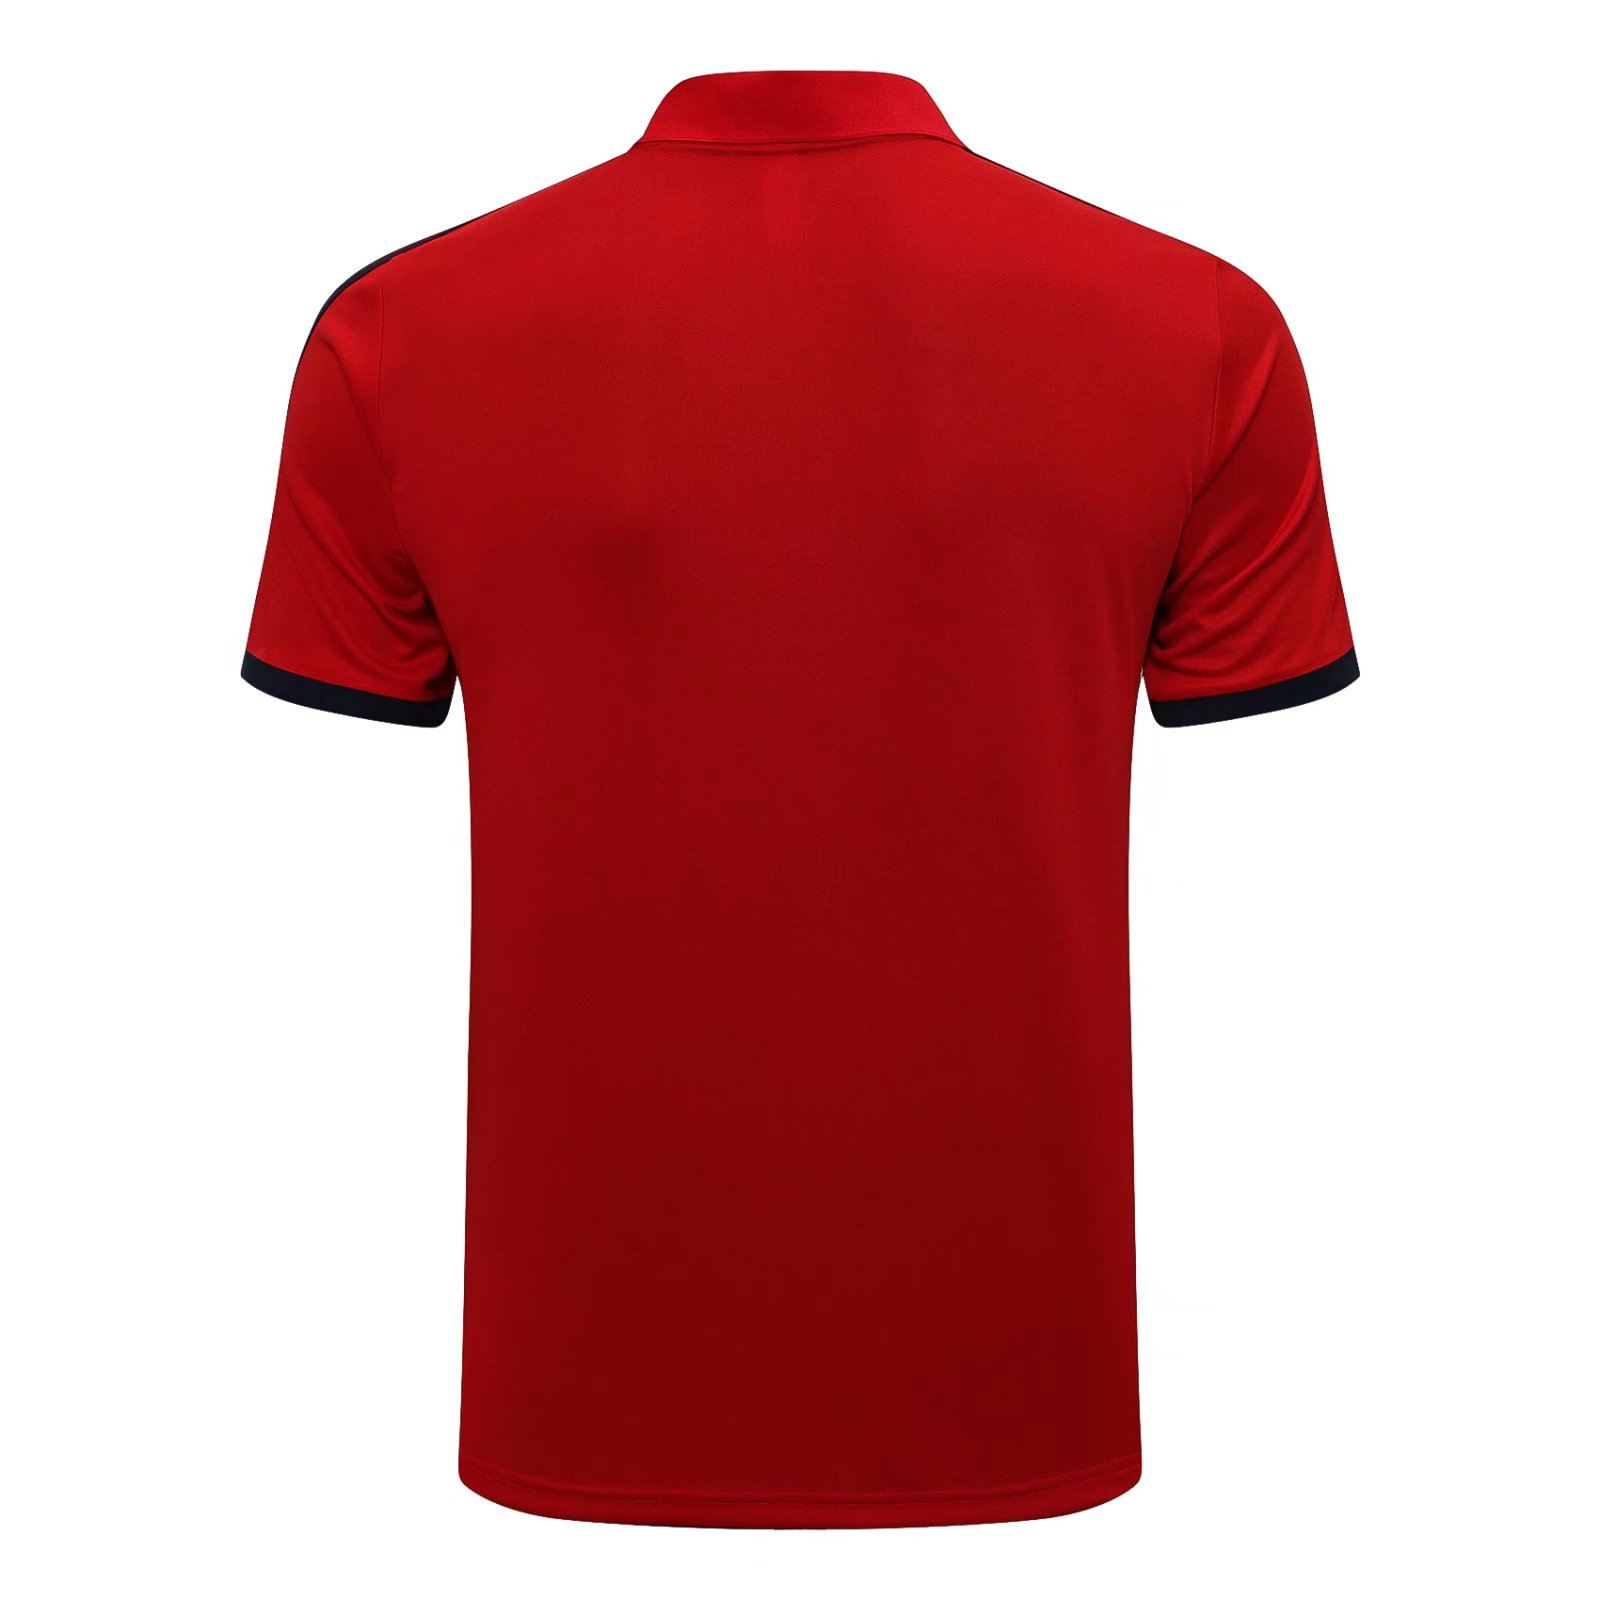 Arsenal Soccer Polo Jersey Red - Black Stripes Mens 2021/22